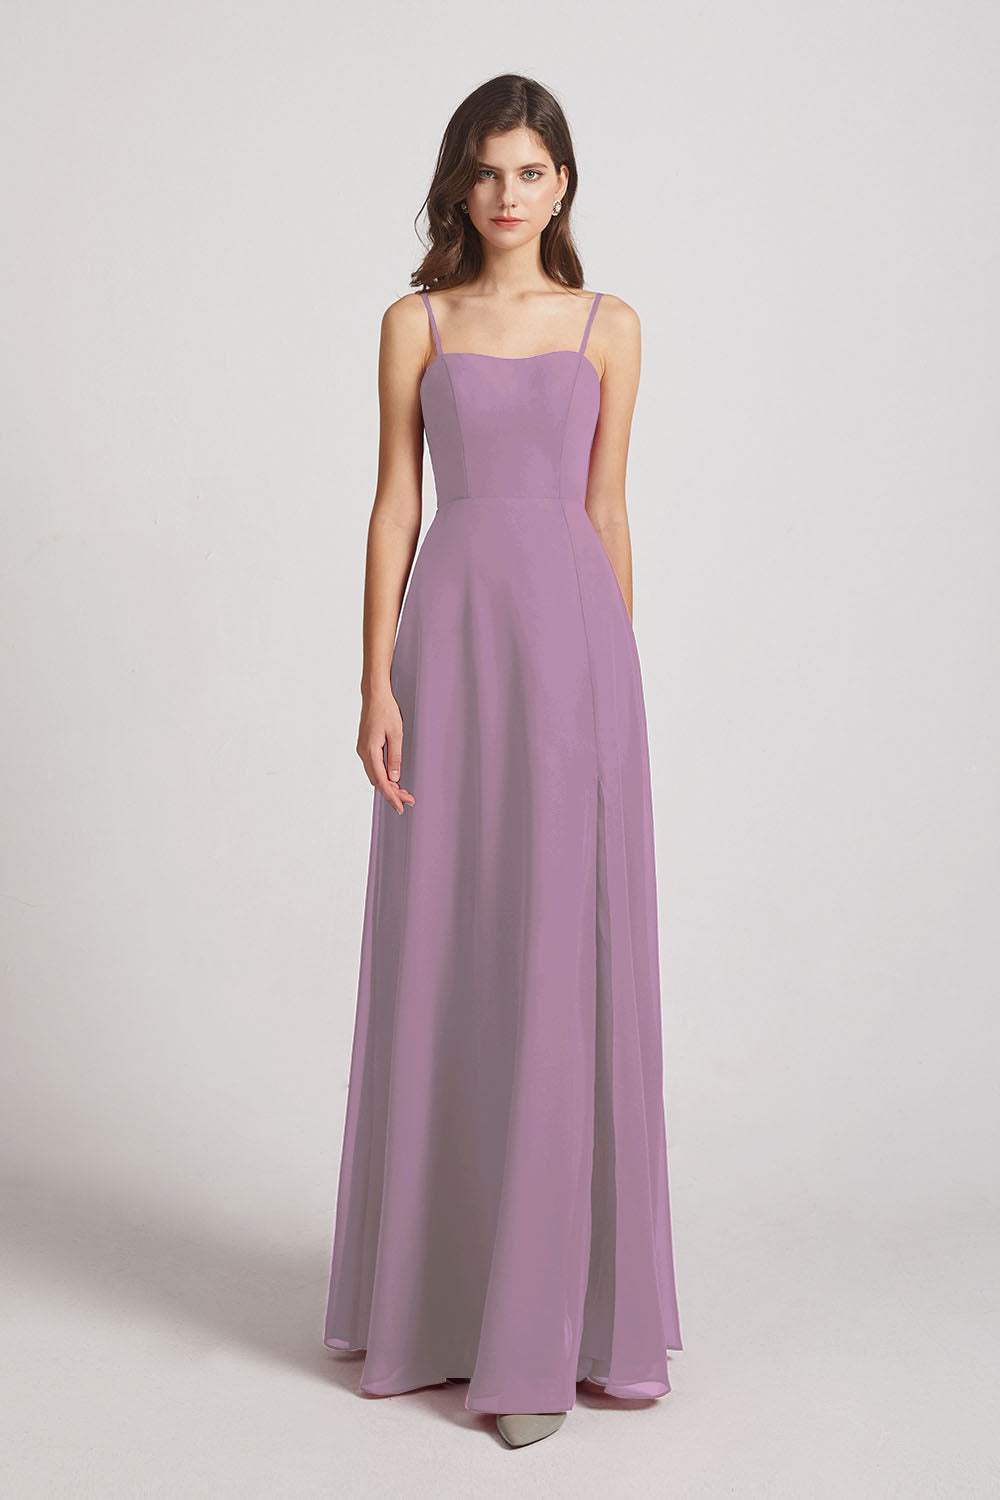 Alfa Bridal Dark Lavender Spaghetti Straps Long Chiffon Bridesmaid Dresses with Side Slit (AF0112)